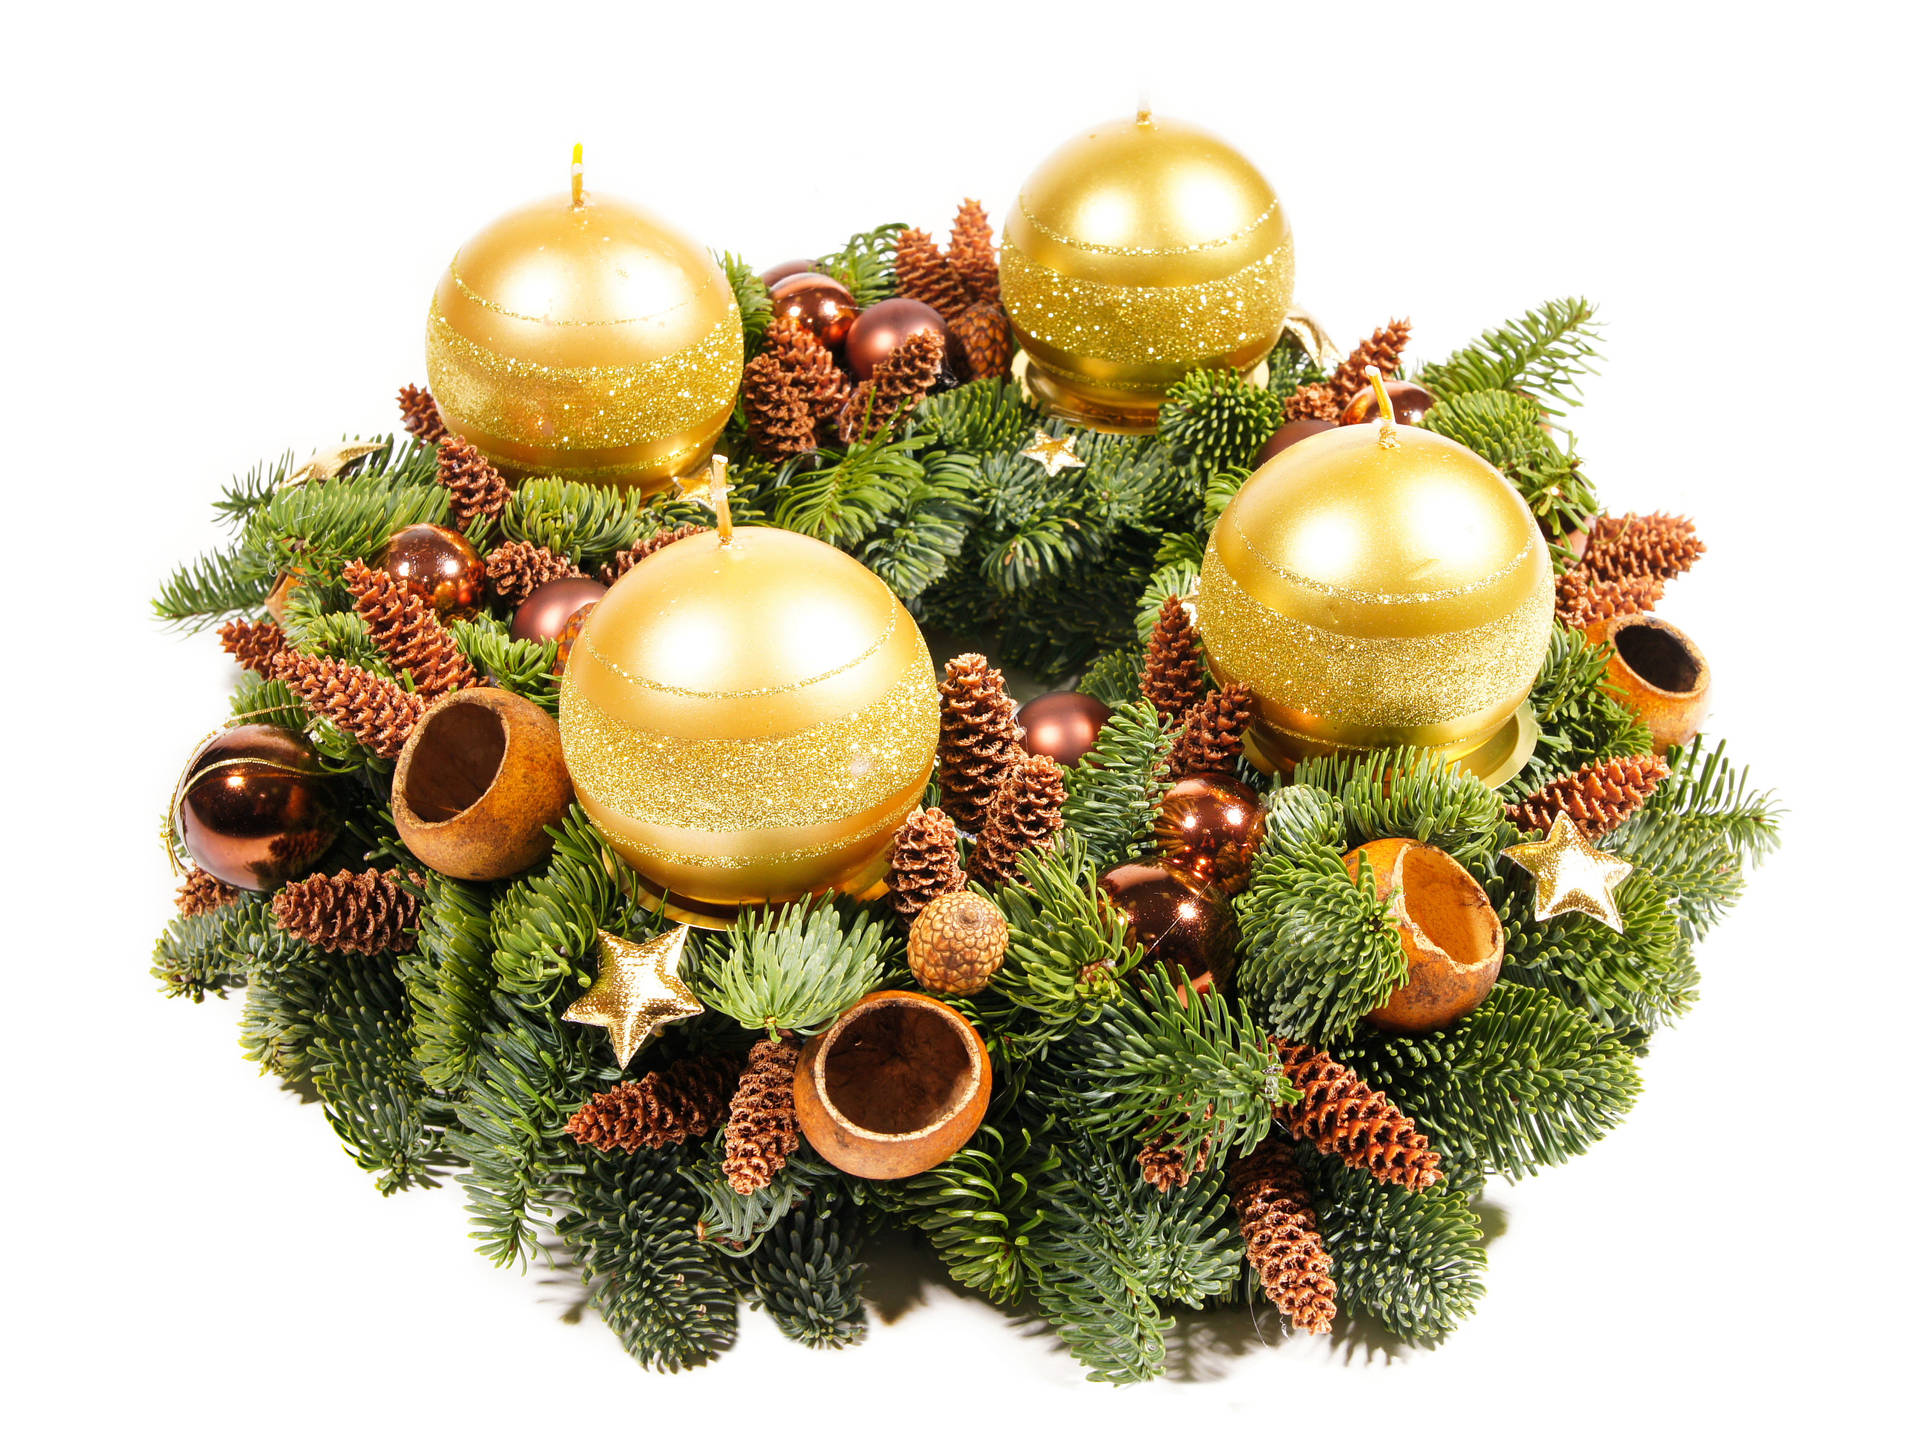 Christmas Wreath With Golden Balls